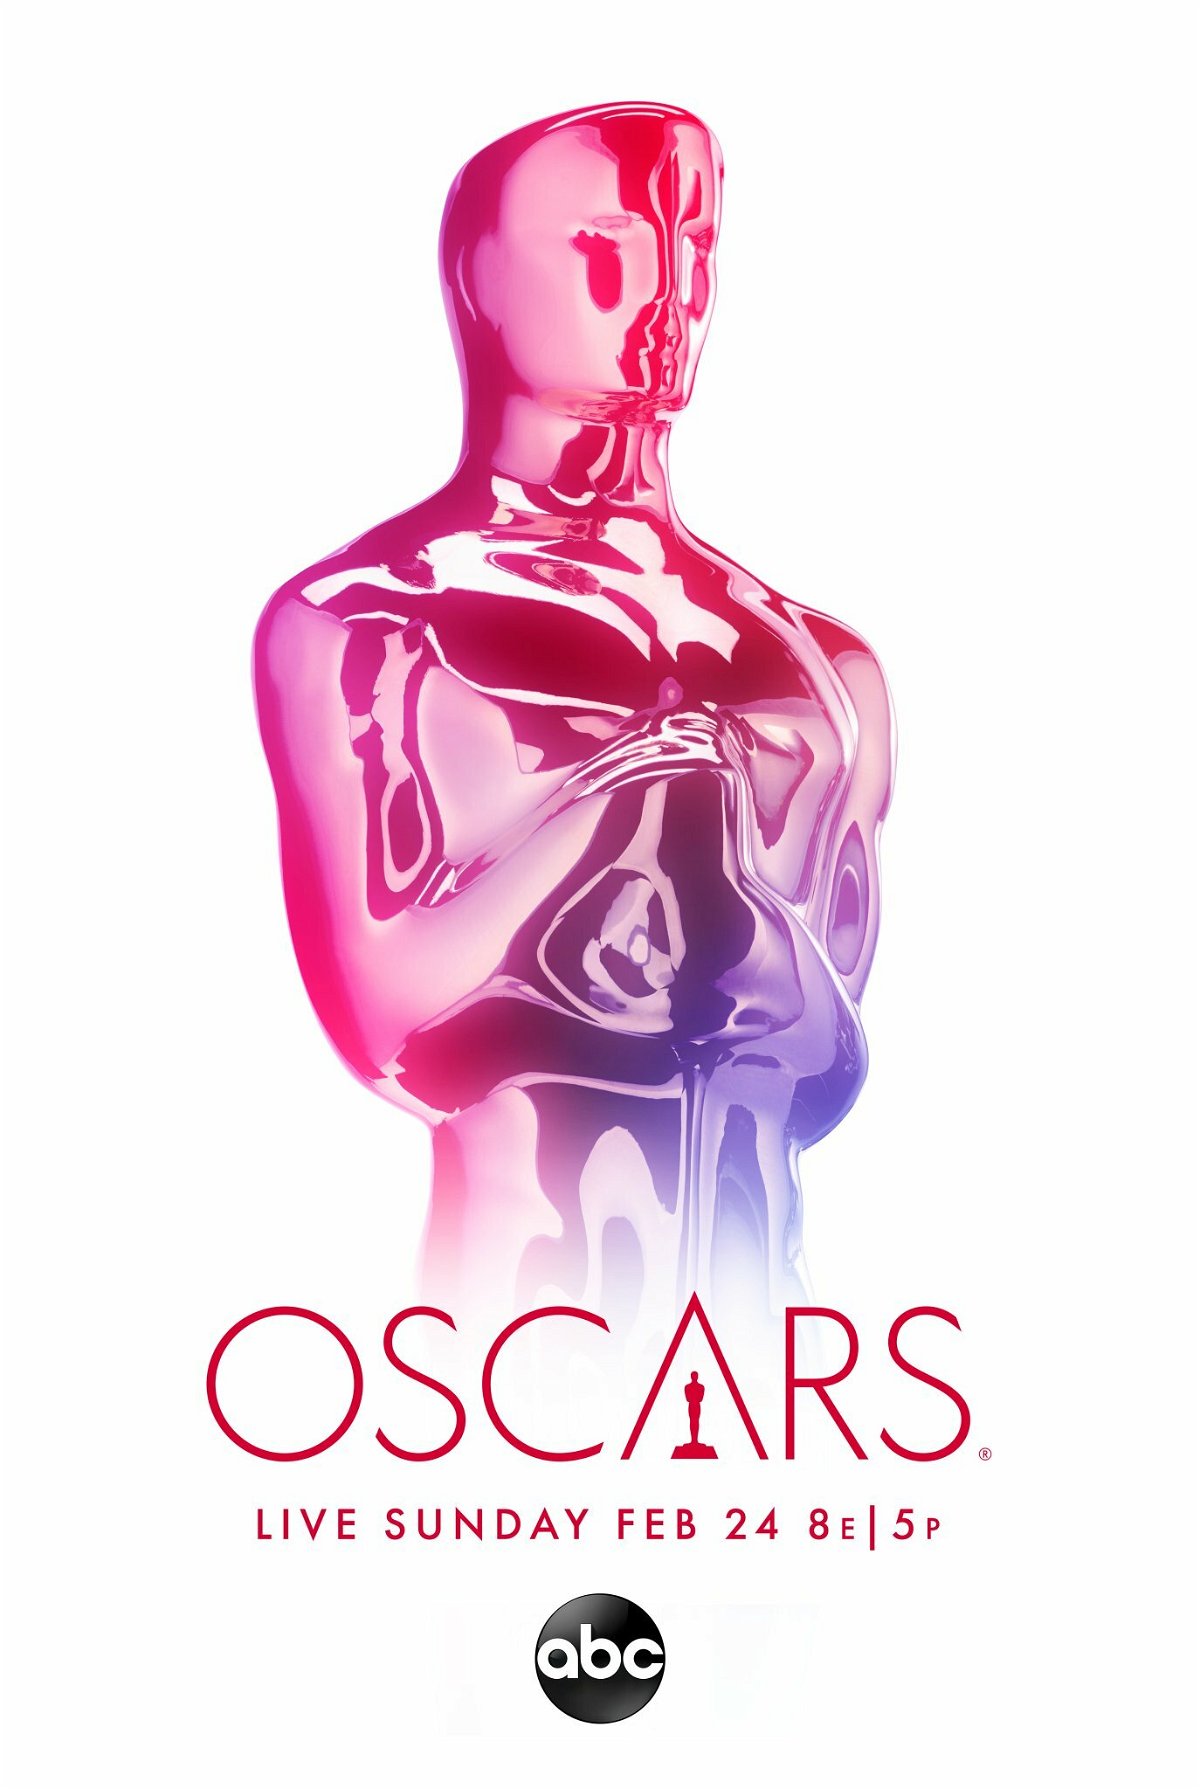 Il poster degli Oscar 2019